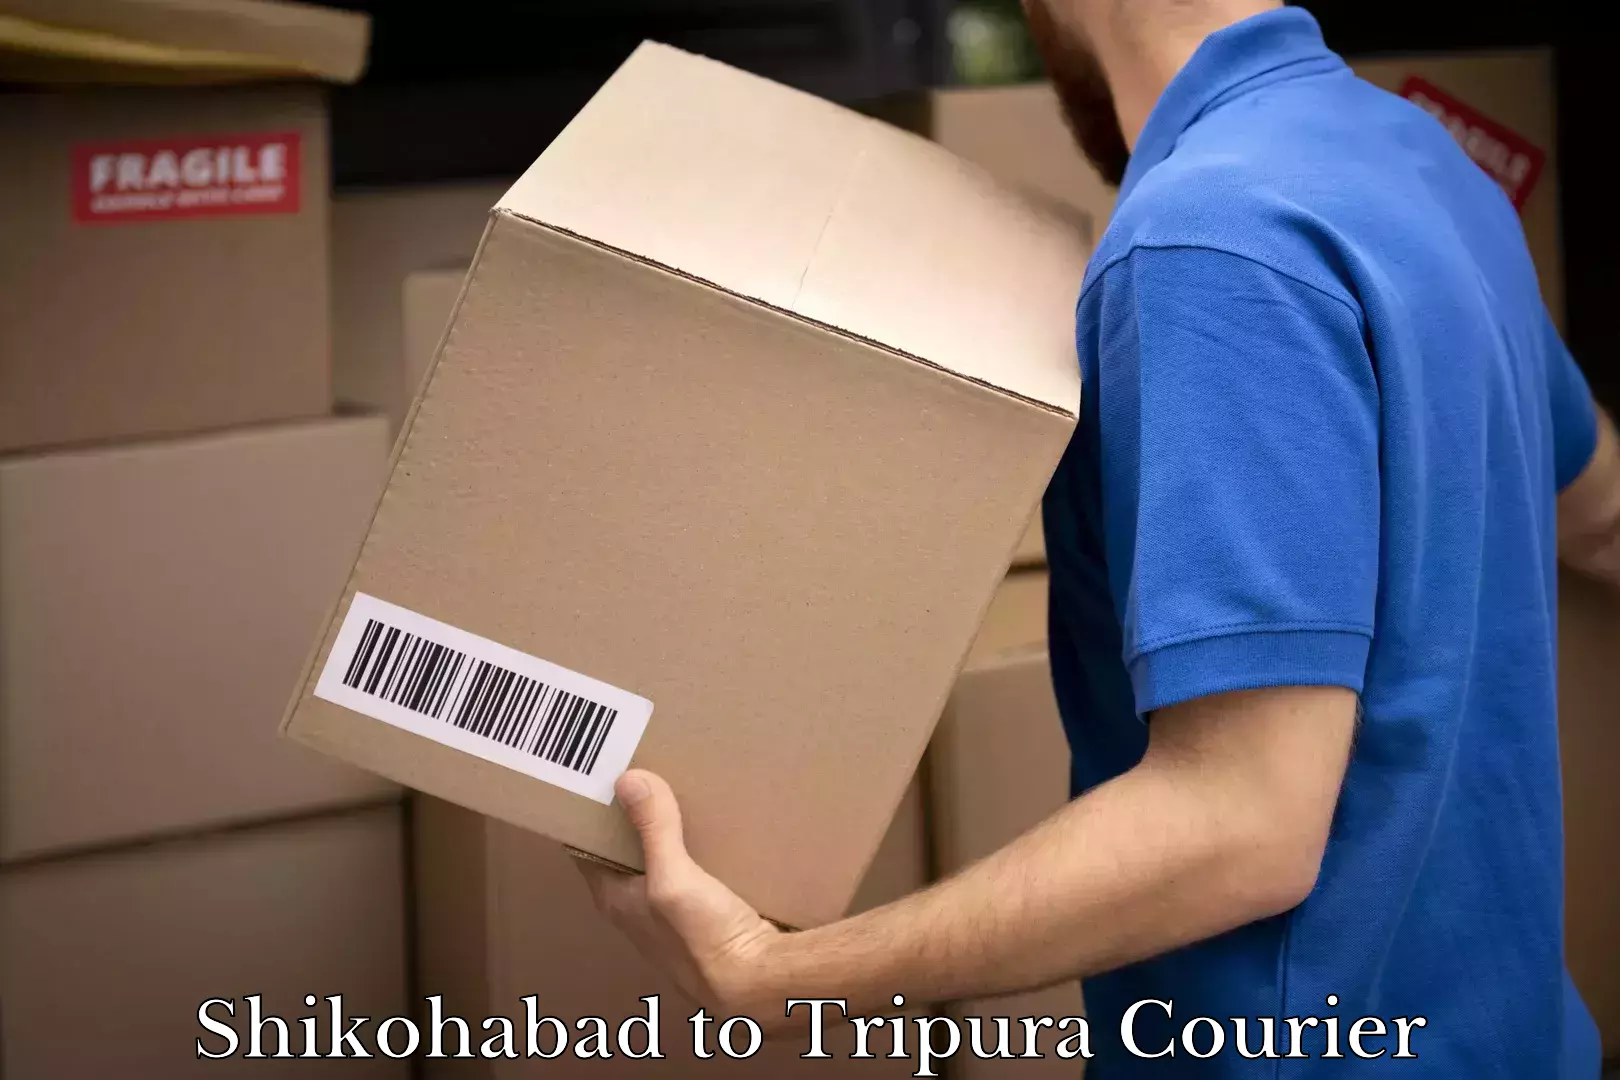 Global courier networks Shikohabad to Tripura